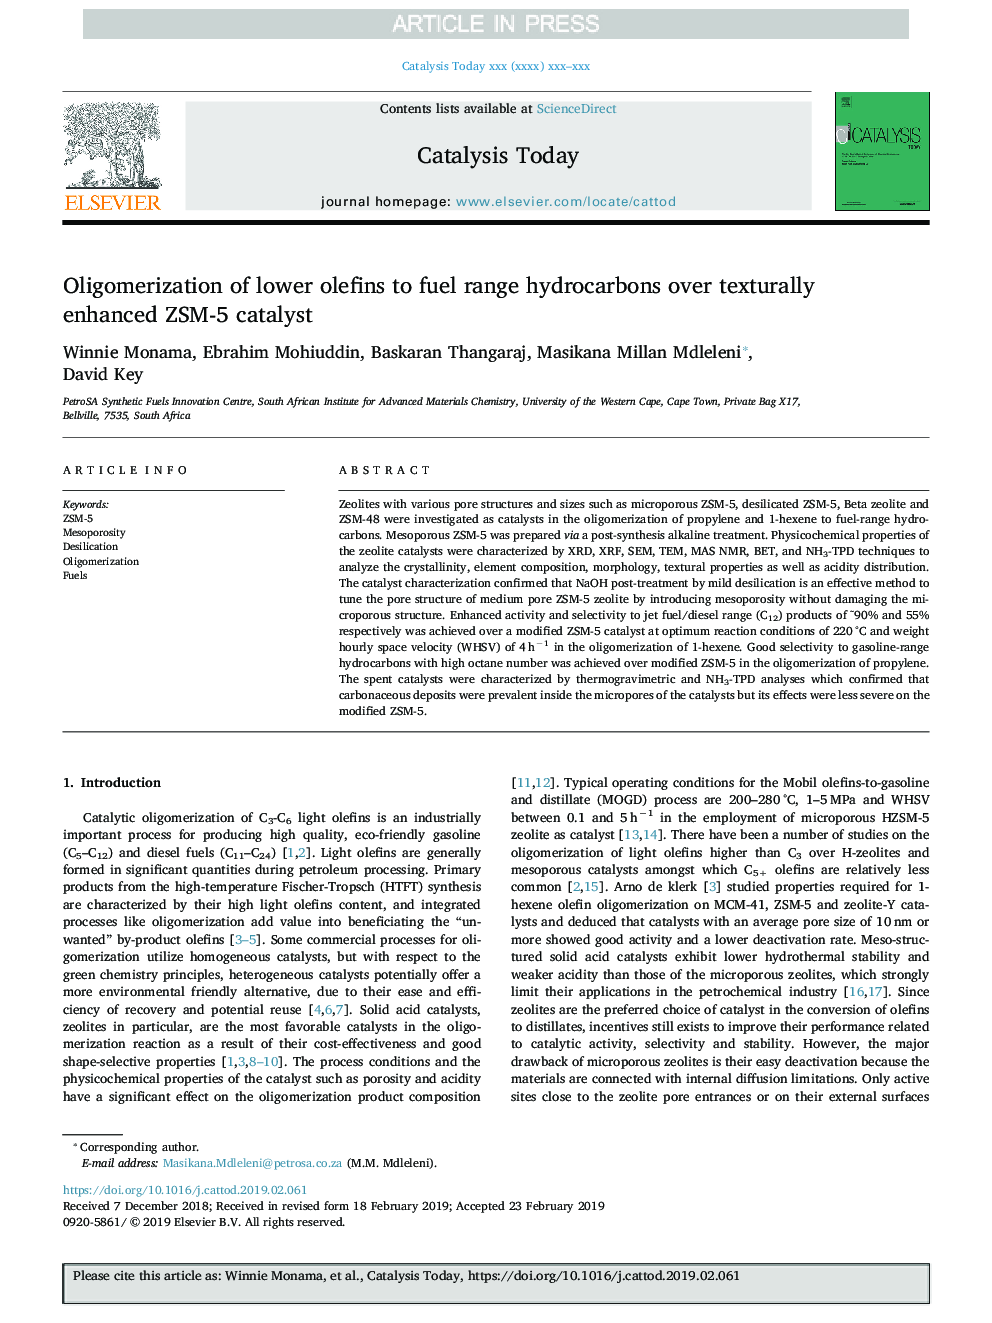 Oligomerization of lower olefins to fuel range hydrocarbons over texturally enhanced ZSM-5 catalyst